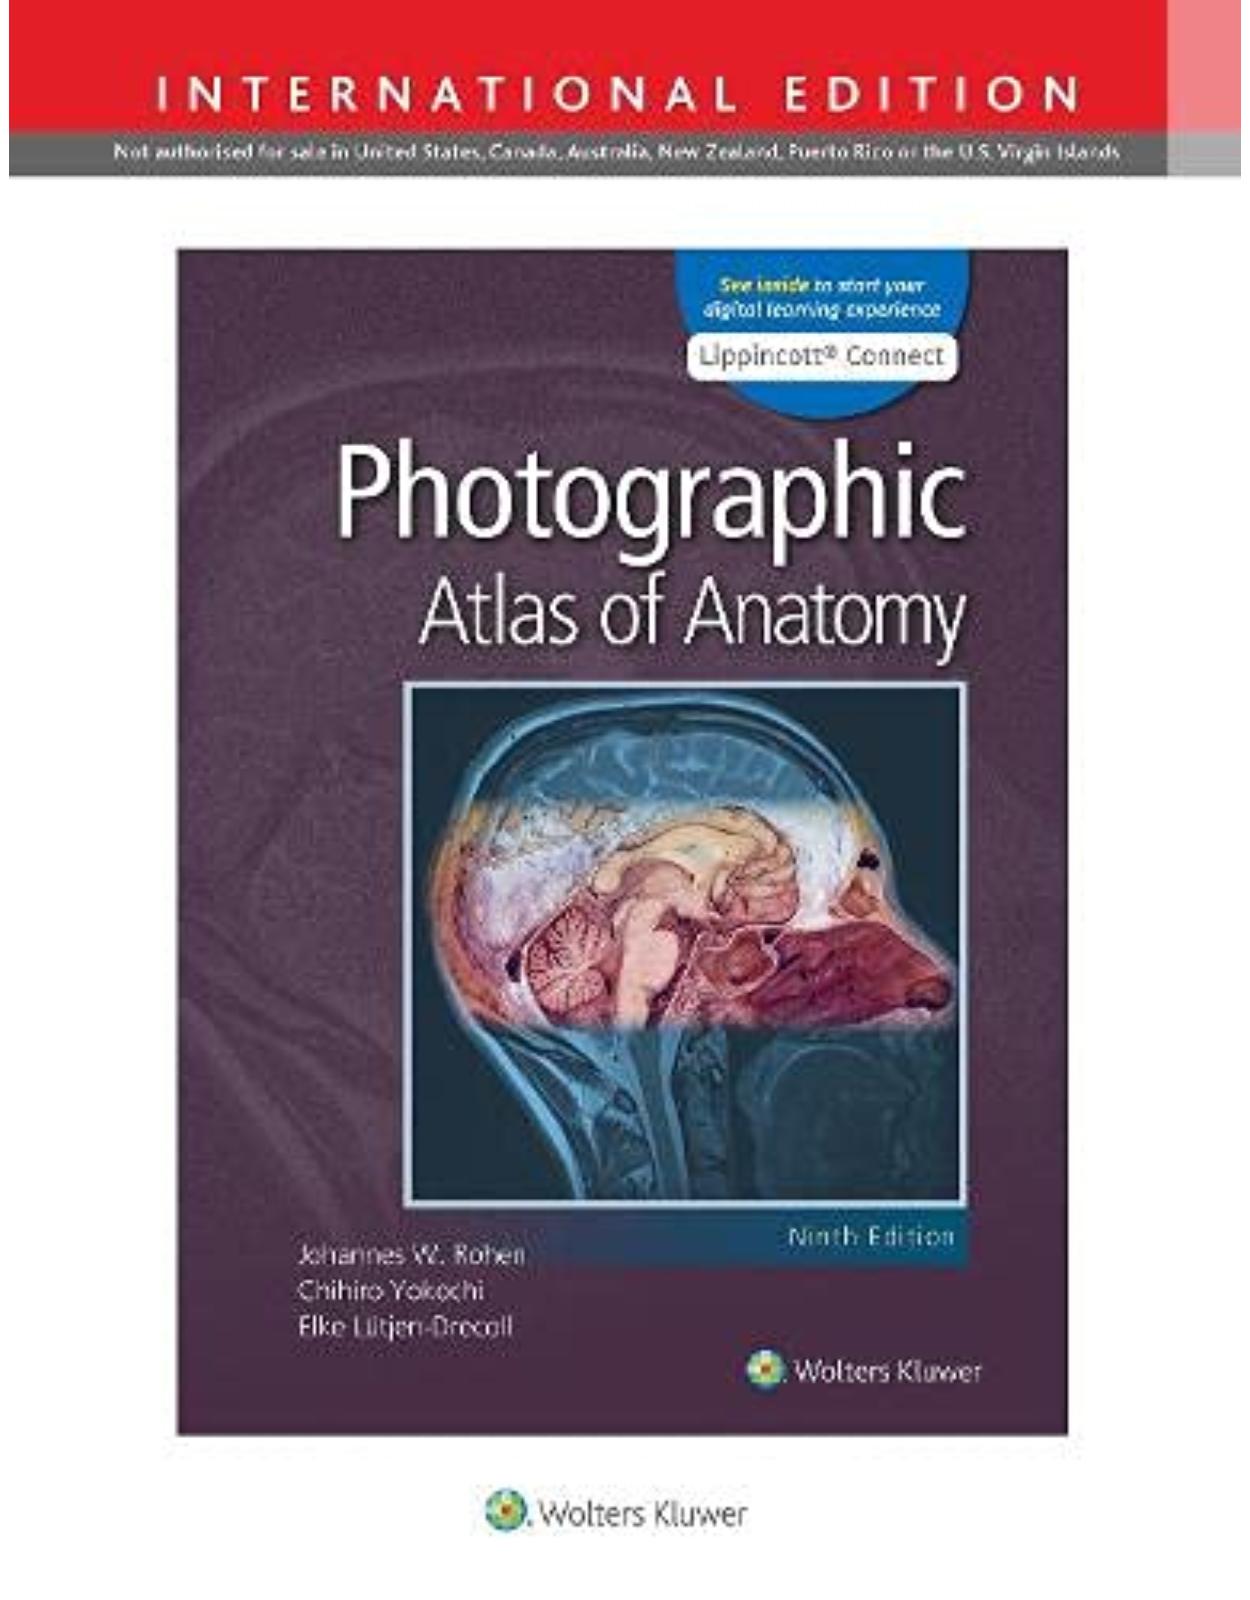 Photographic Atlas of Anatomy 9E International Edition